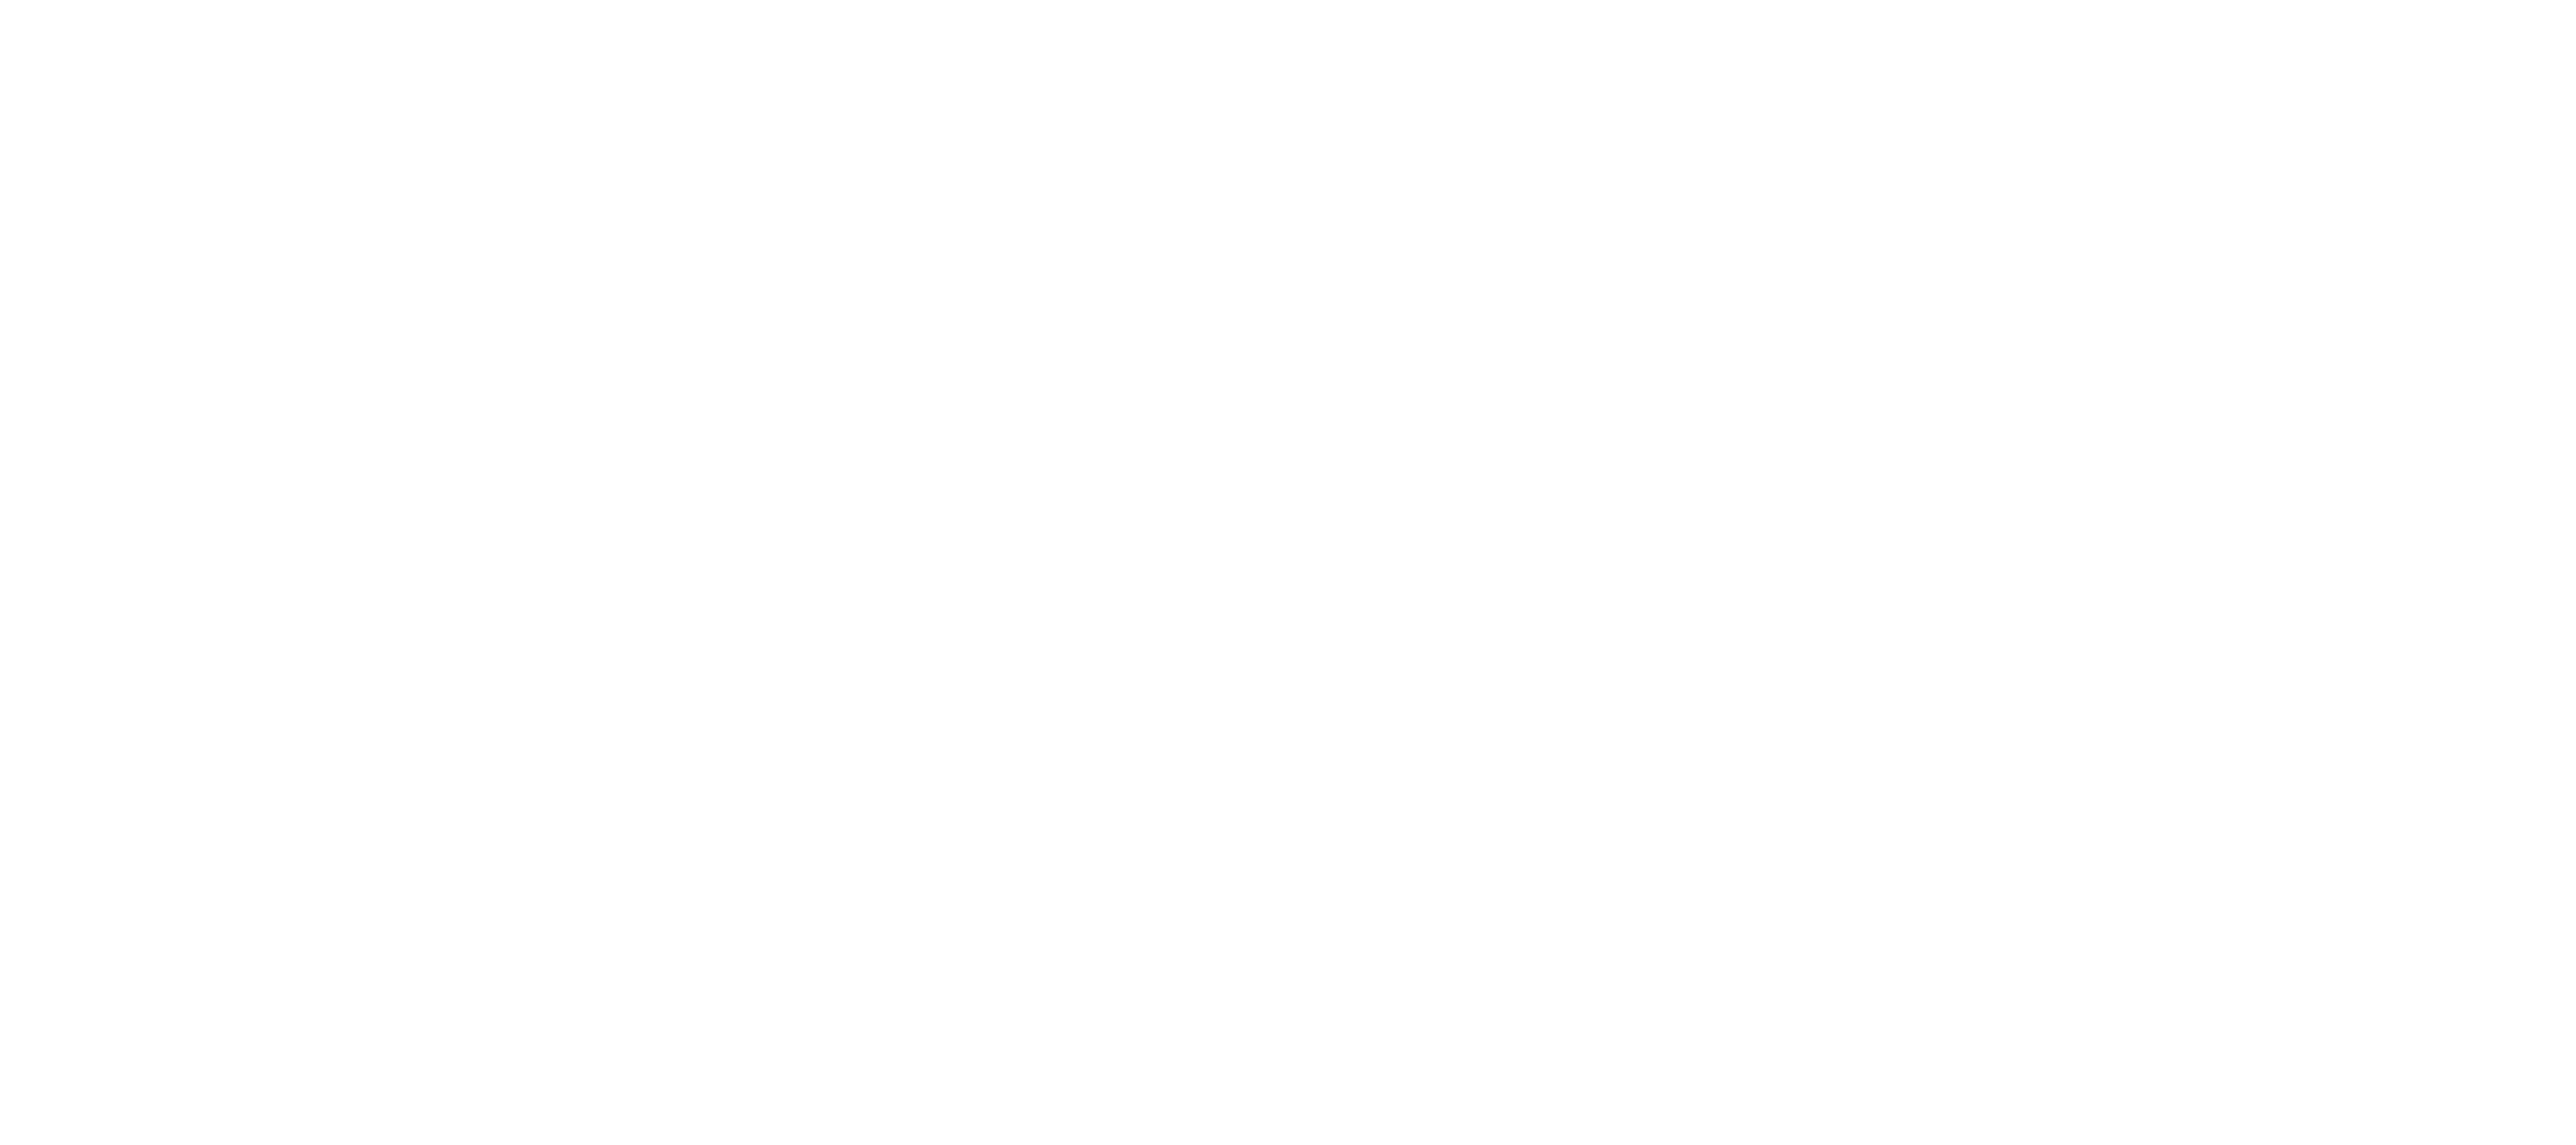 yeimplac-logo-blanco